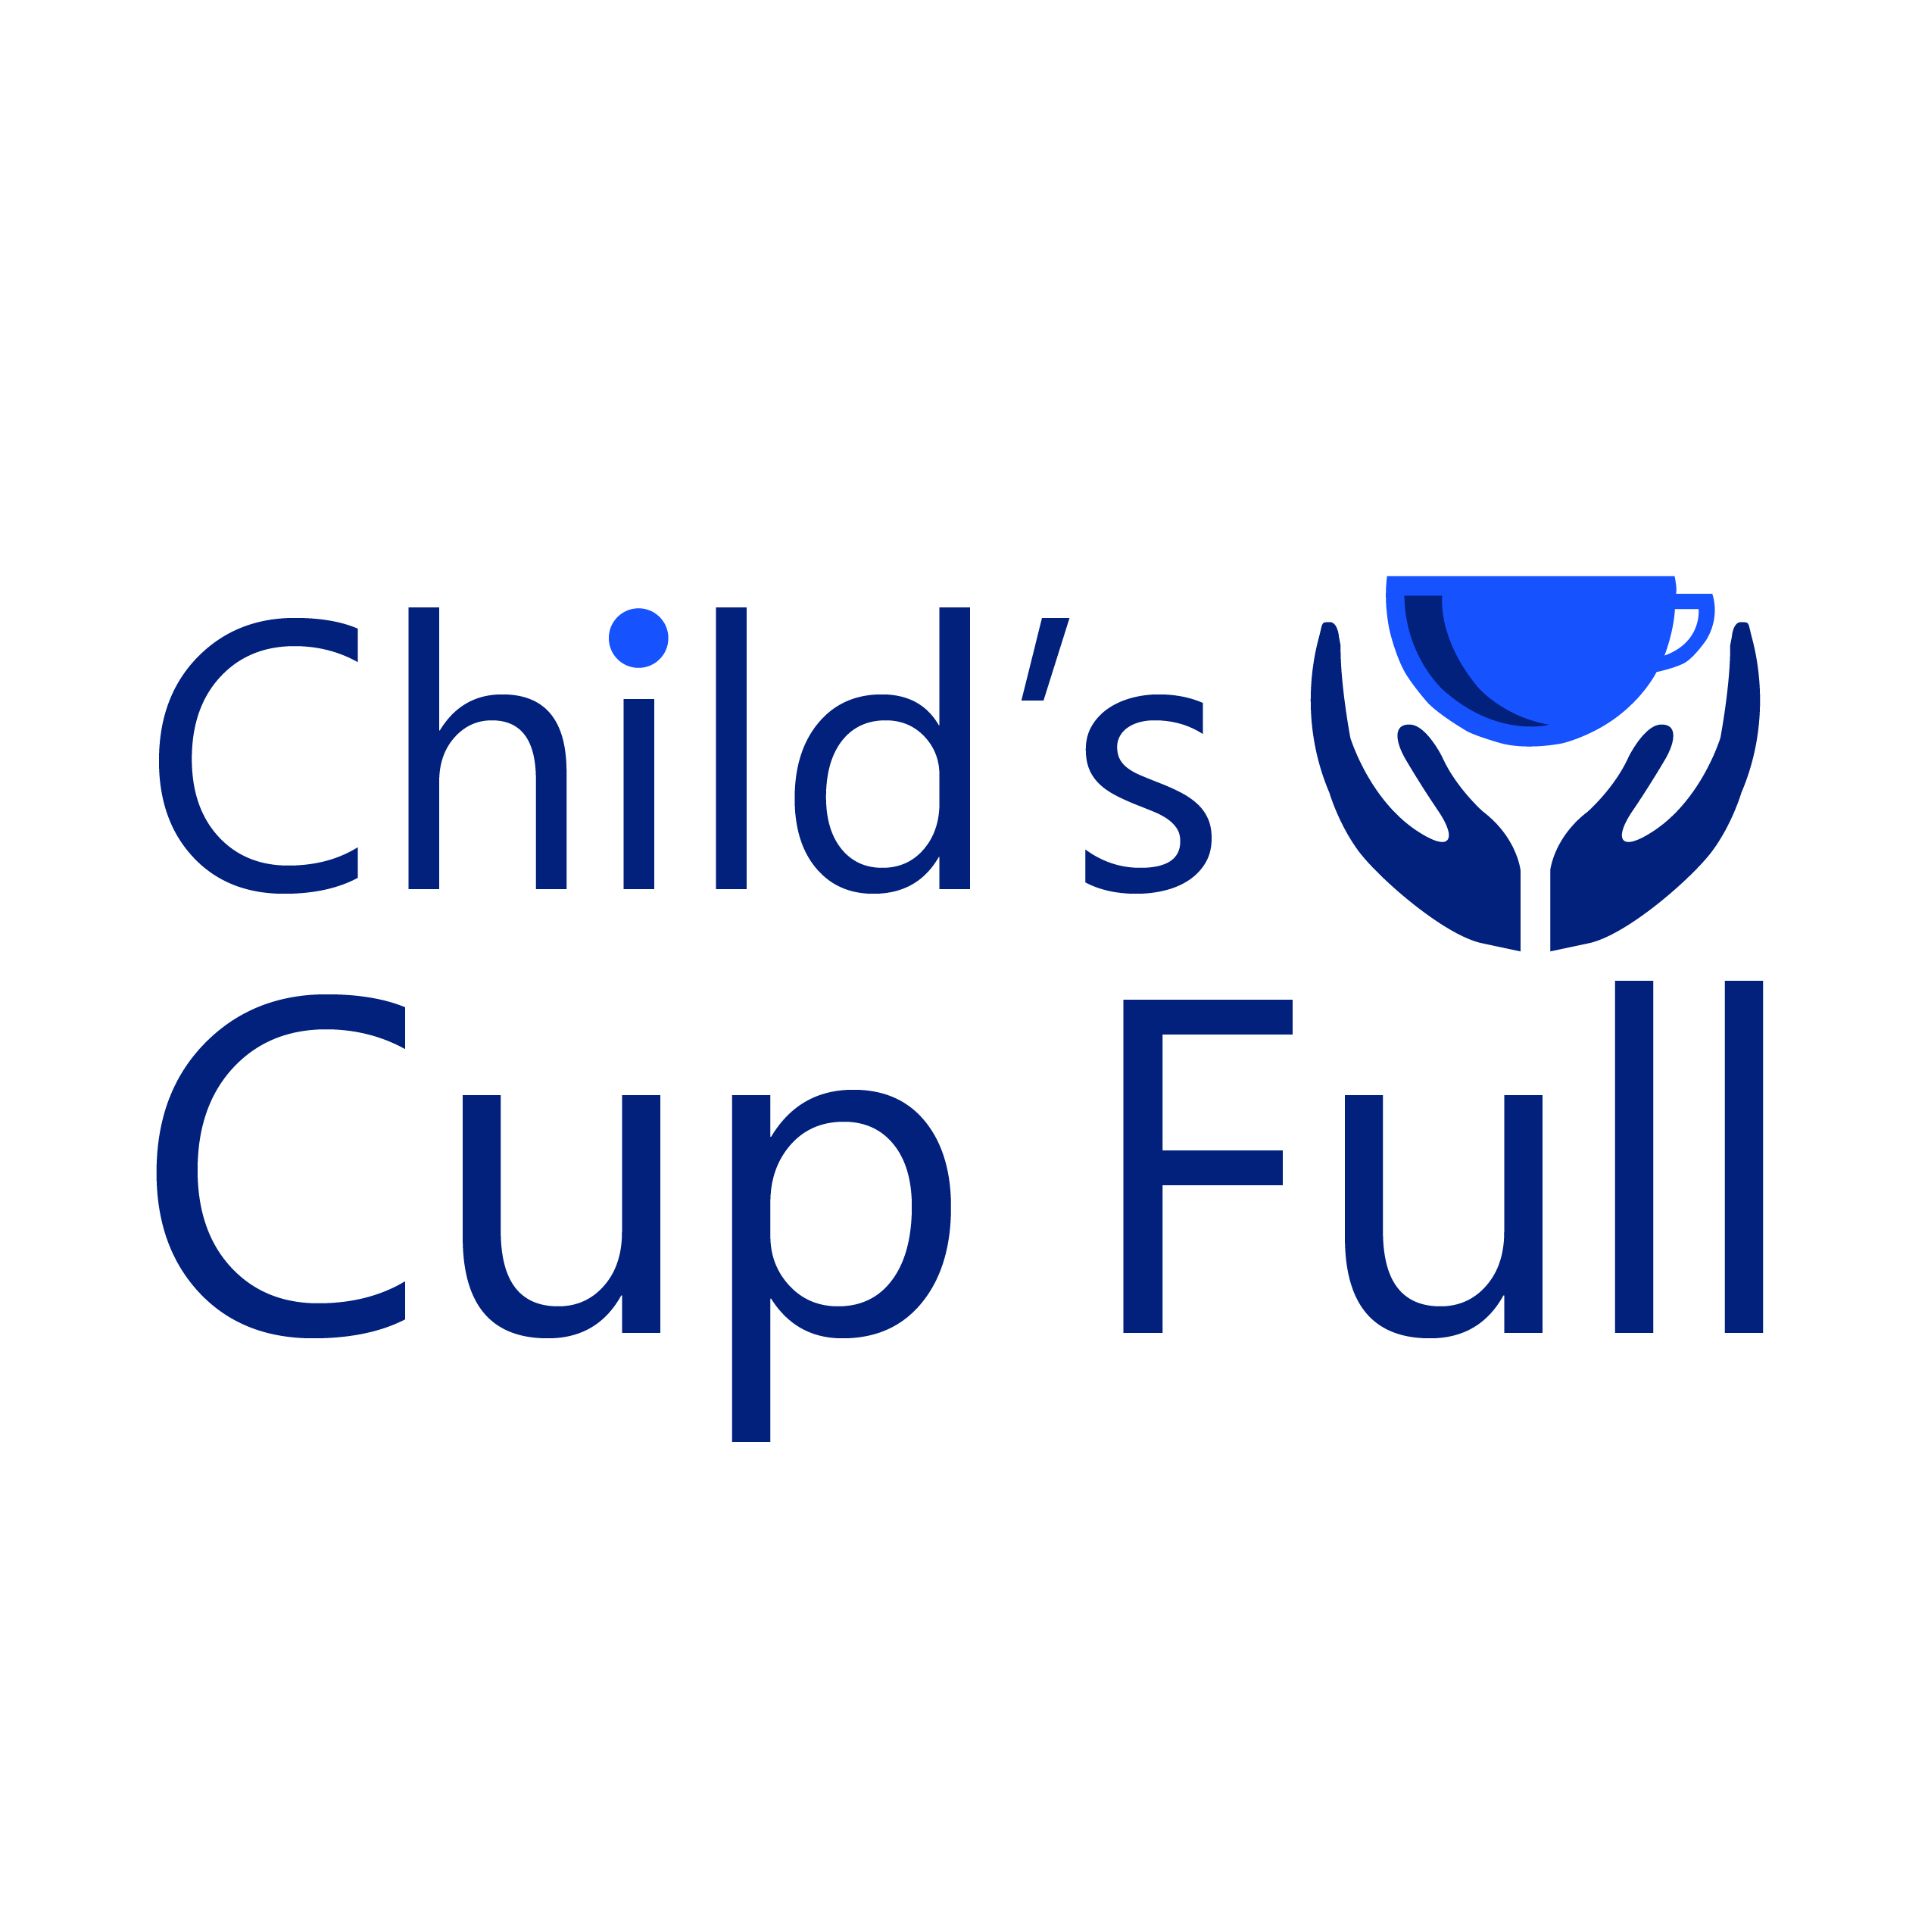 https://ensany.com/A Child's Cup Full Association